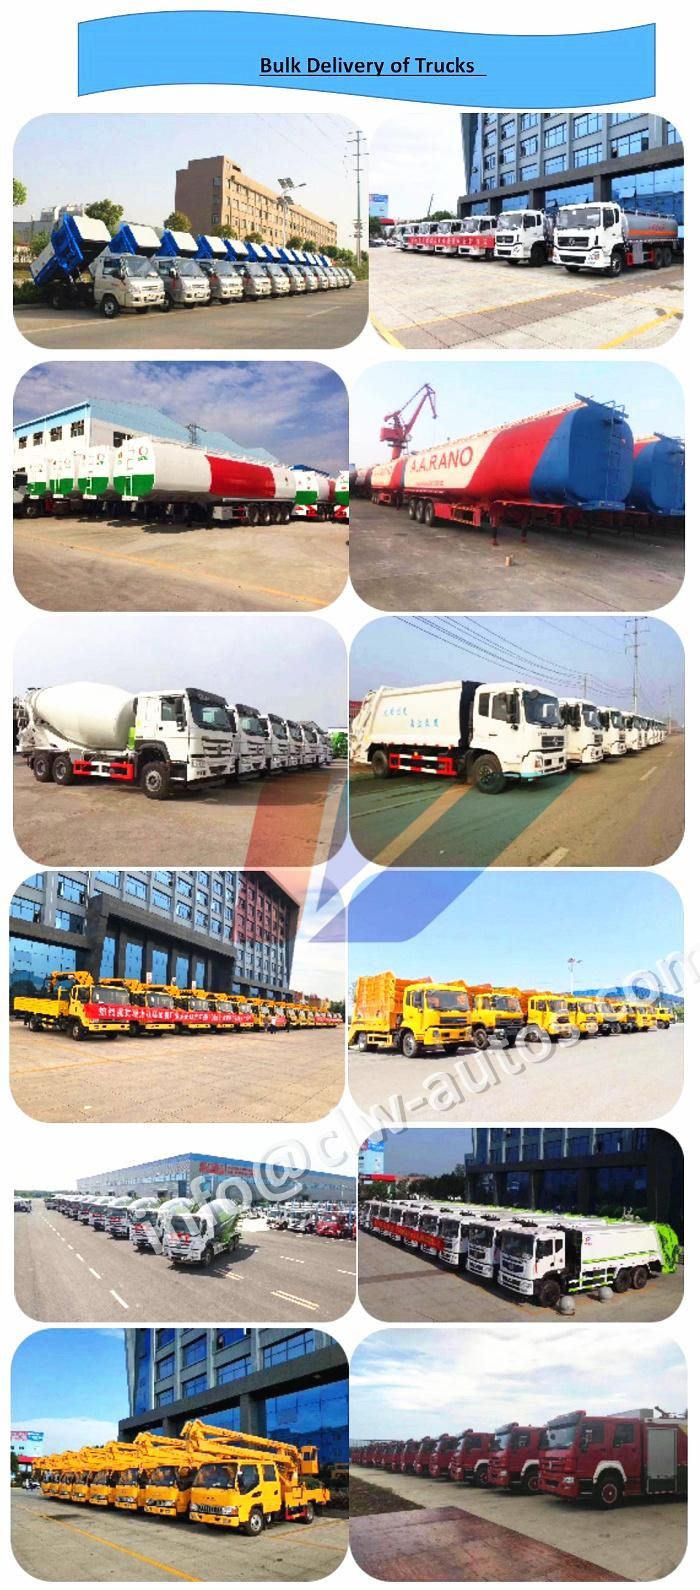 Dongfeng Tianjin 230 HP Clean Sweage Suction Truck Tongjie 250 High Pressure Vacuum Pump Sweage Transport Suction Truck